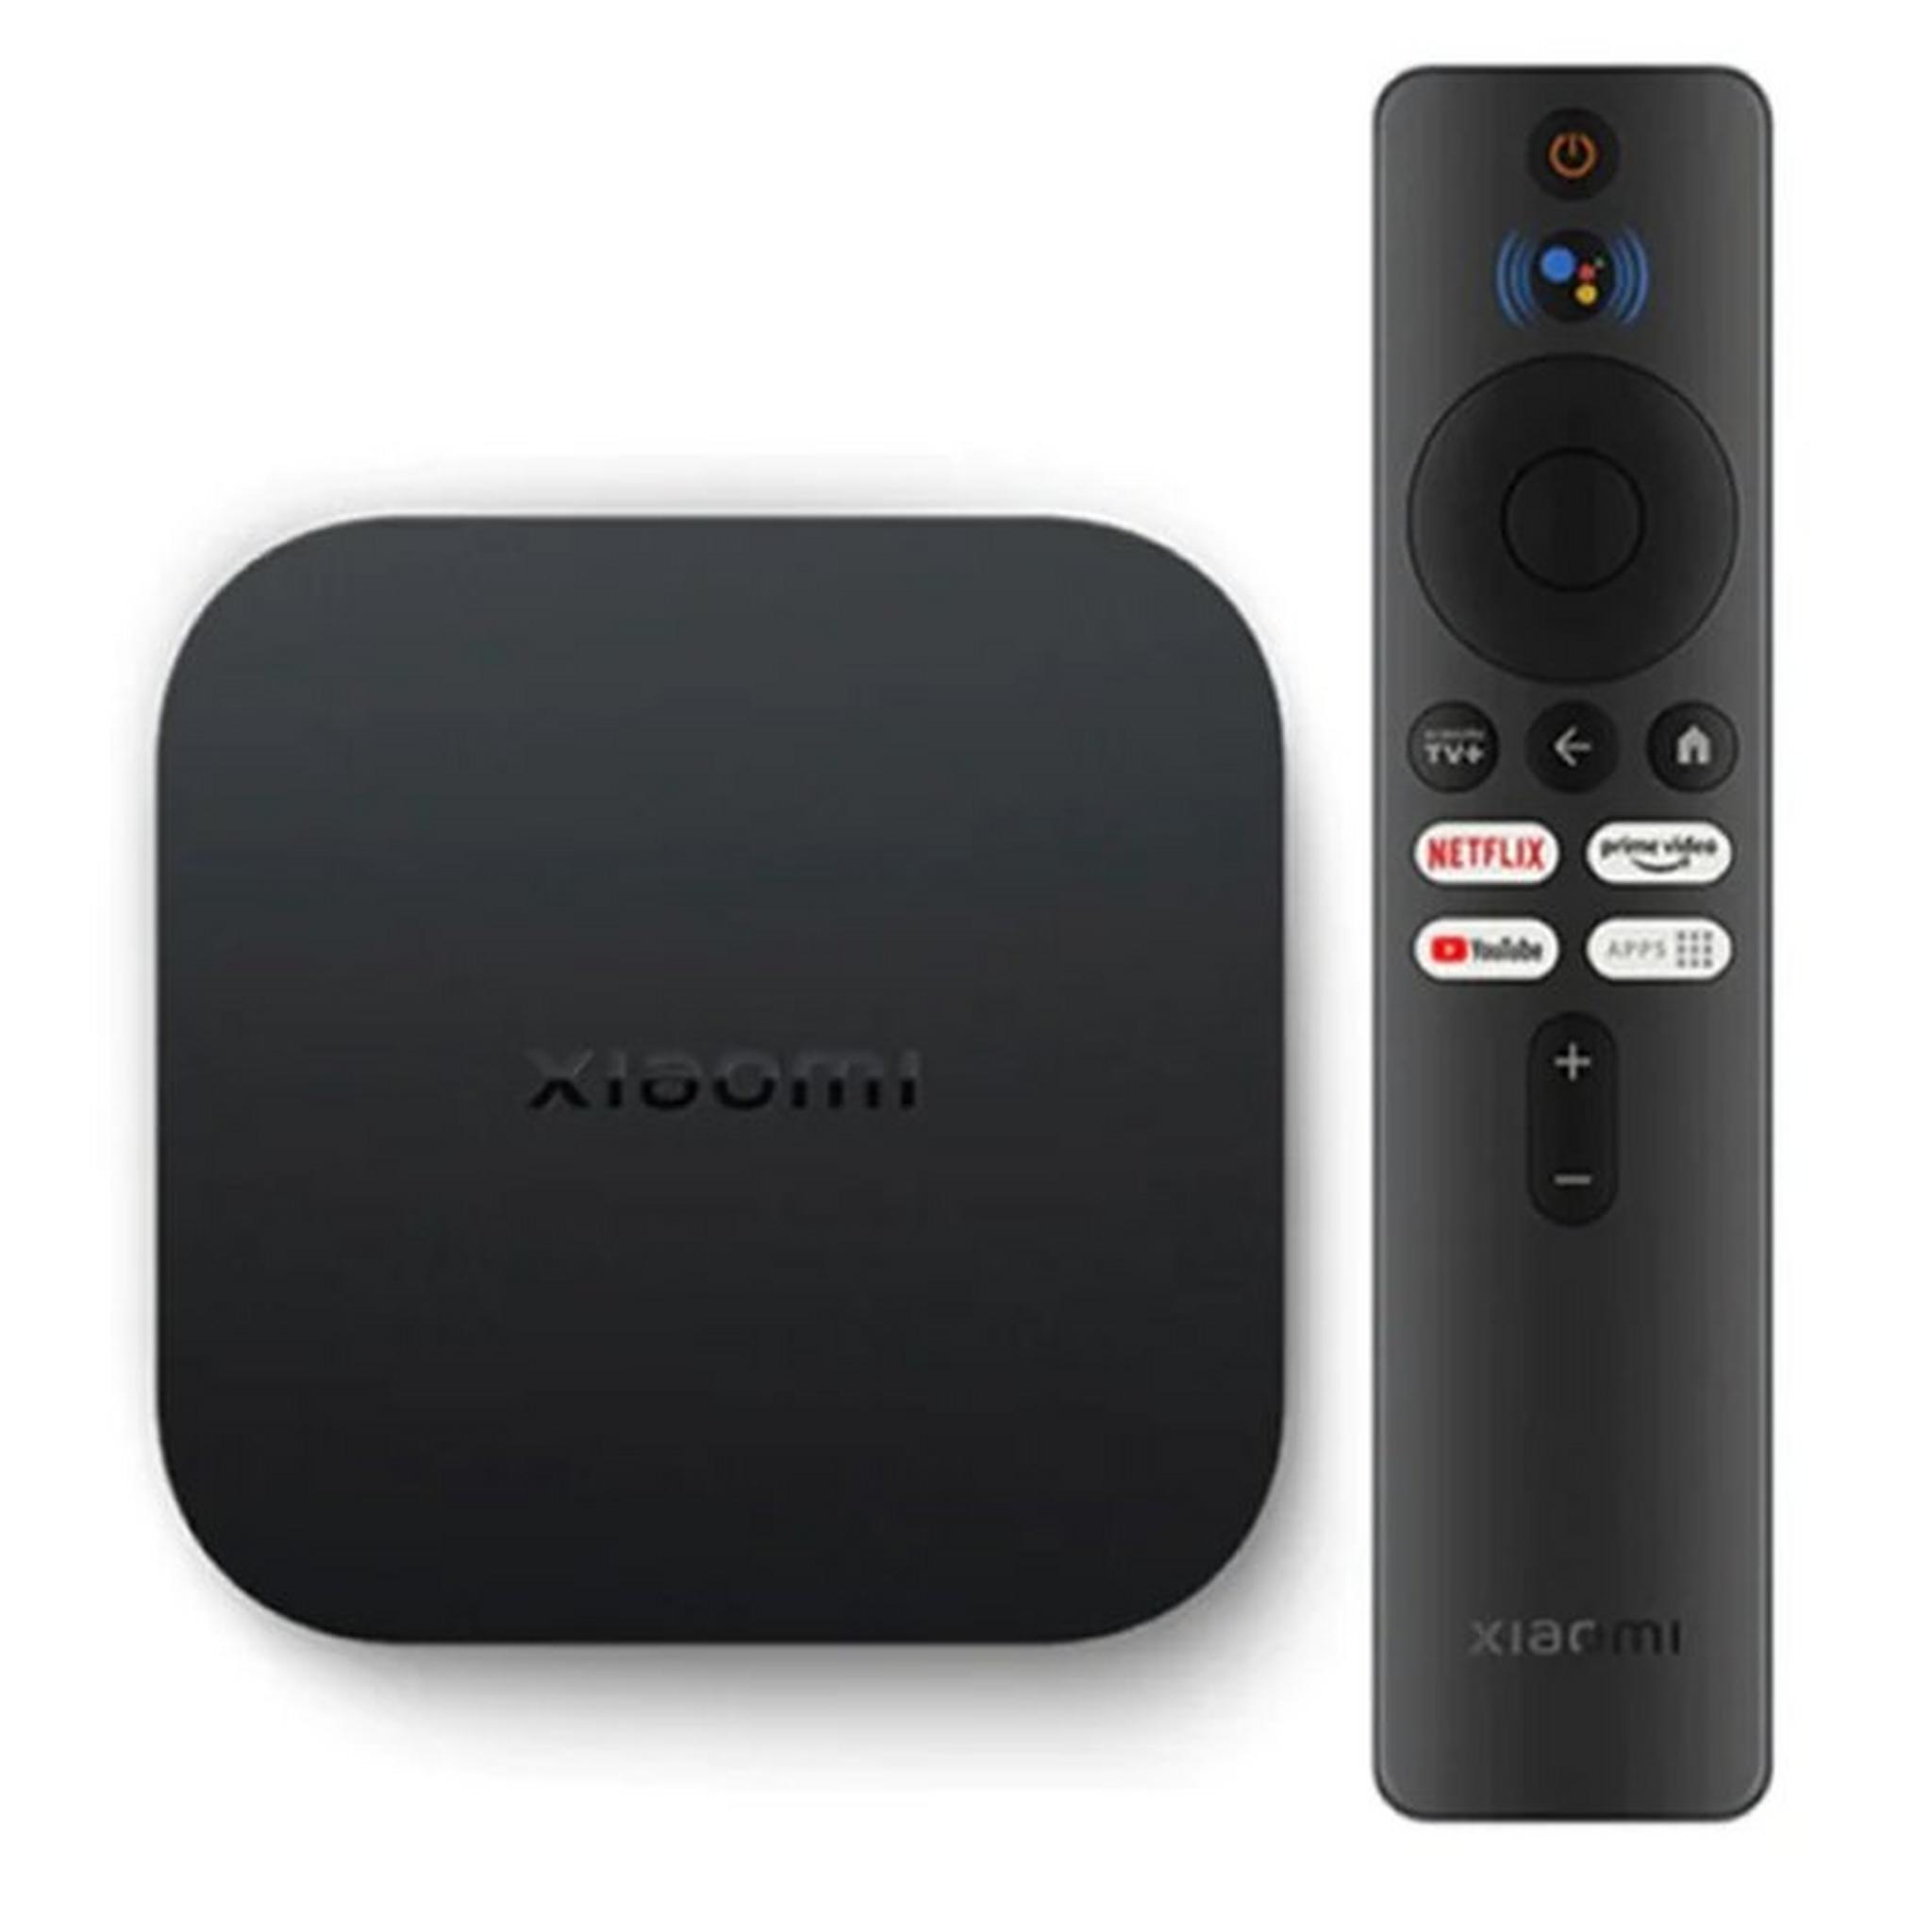 Xiaomi TV Box S 2nd Gen 4K Ultra HD Streaming Media Player, PFJ4155UK – Black